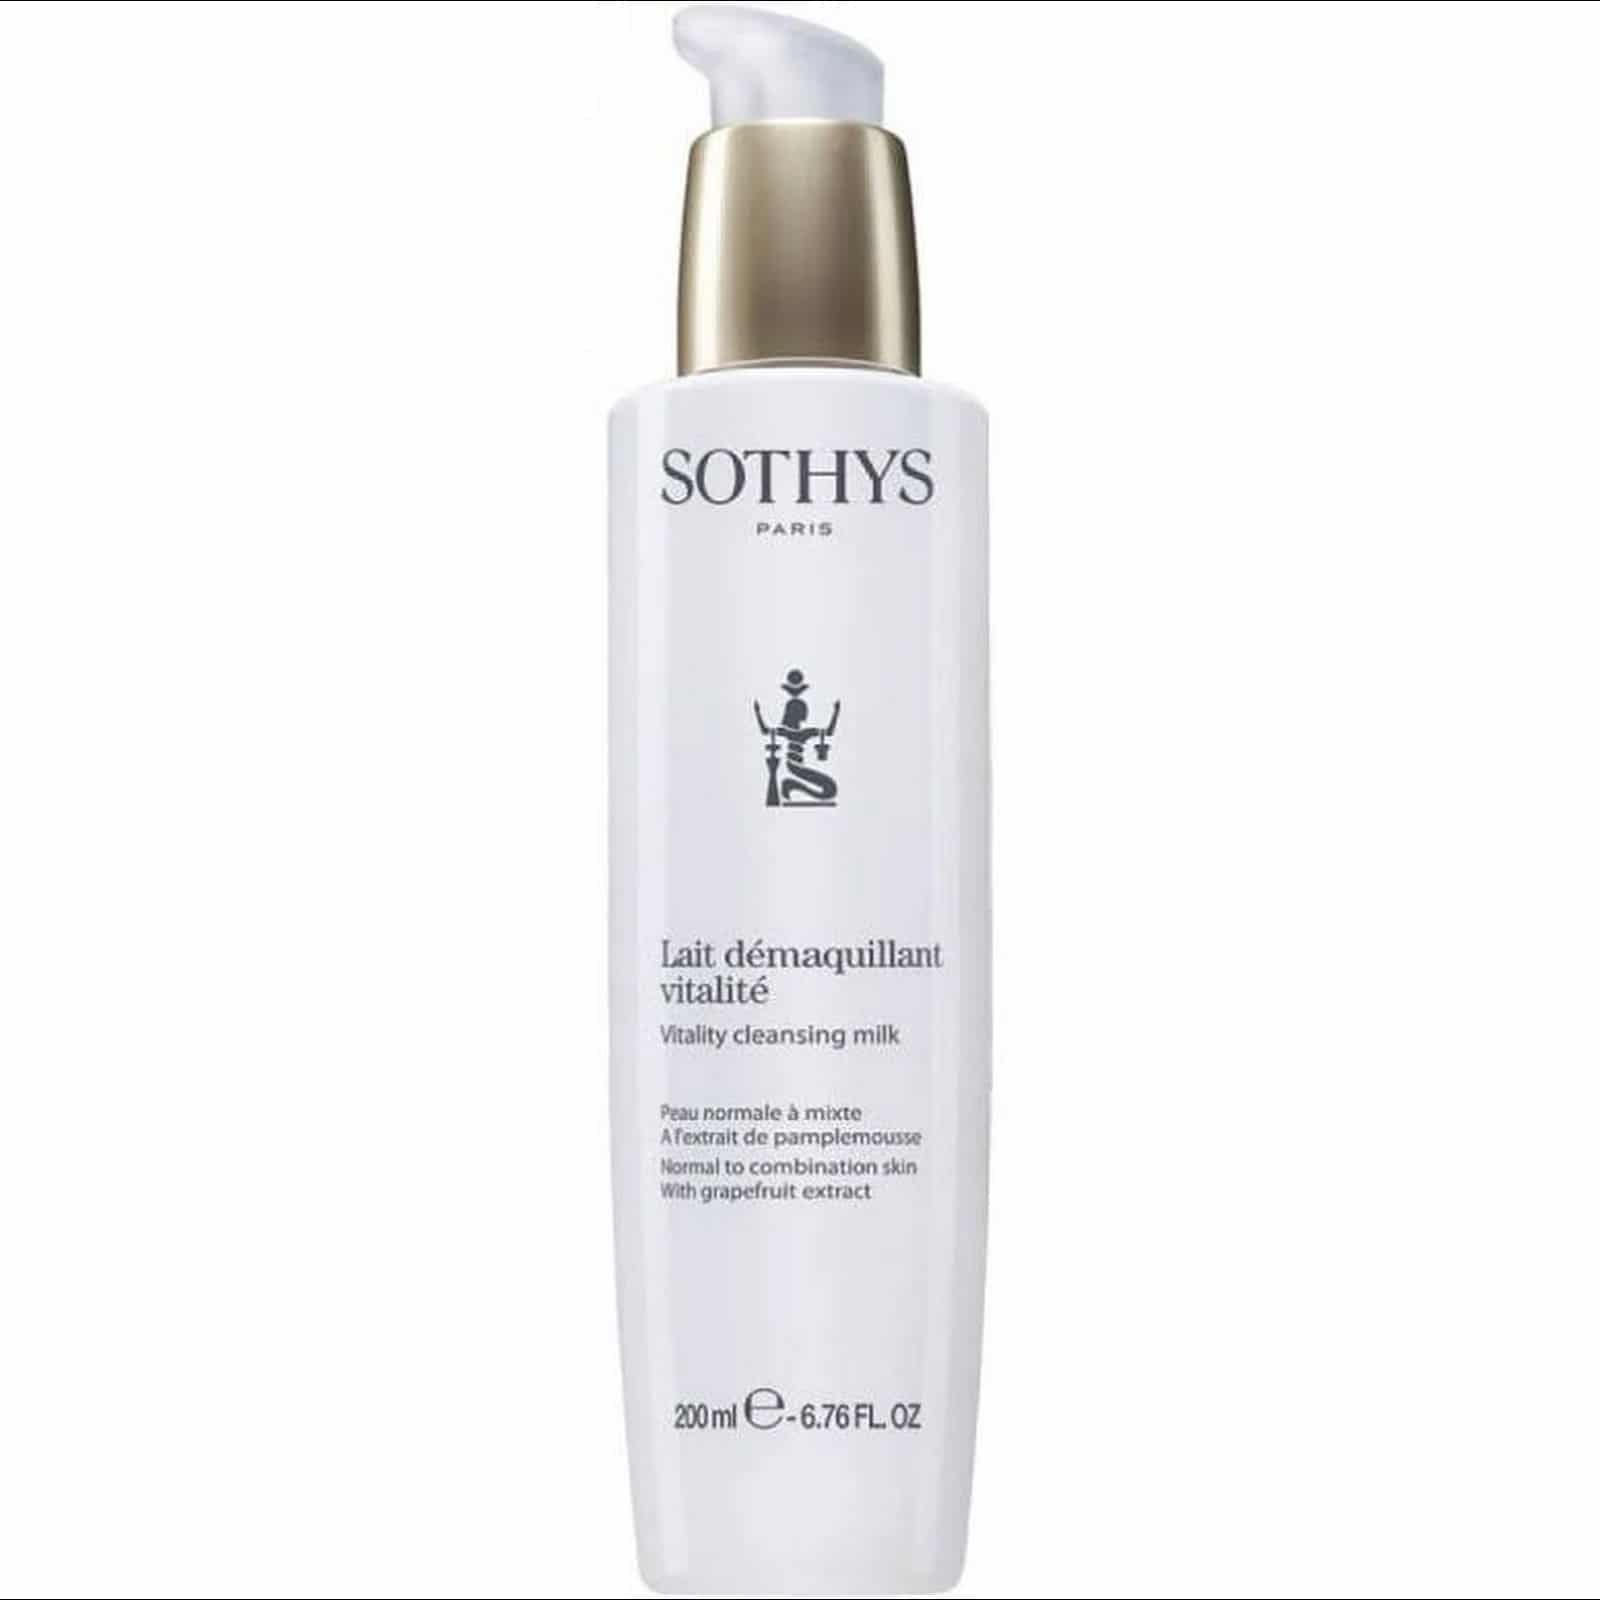 Sothys Vitality Cleansing Milk - 6.76fl oz.